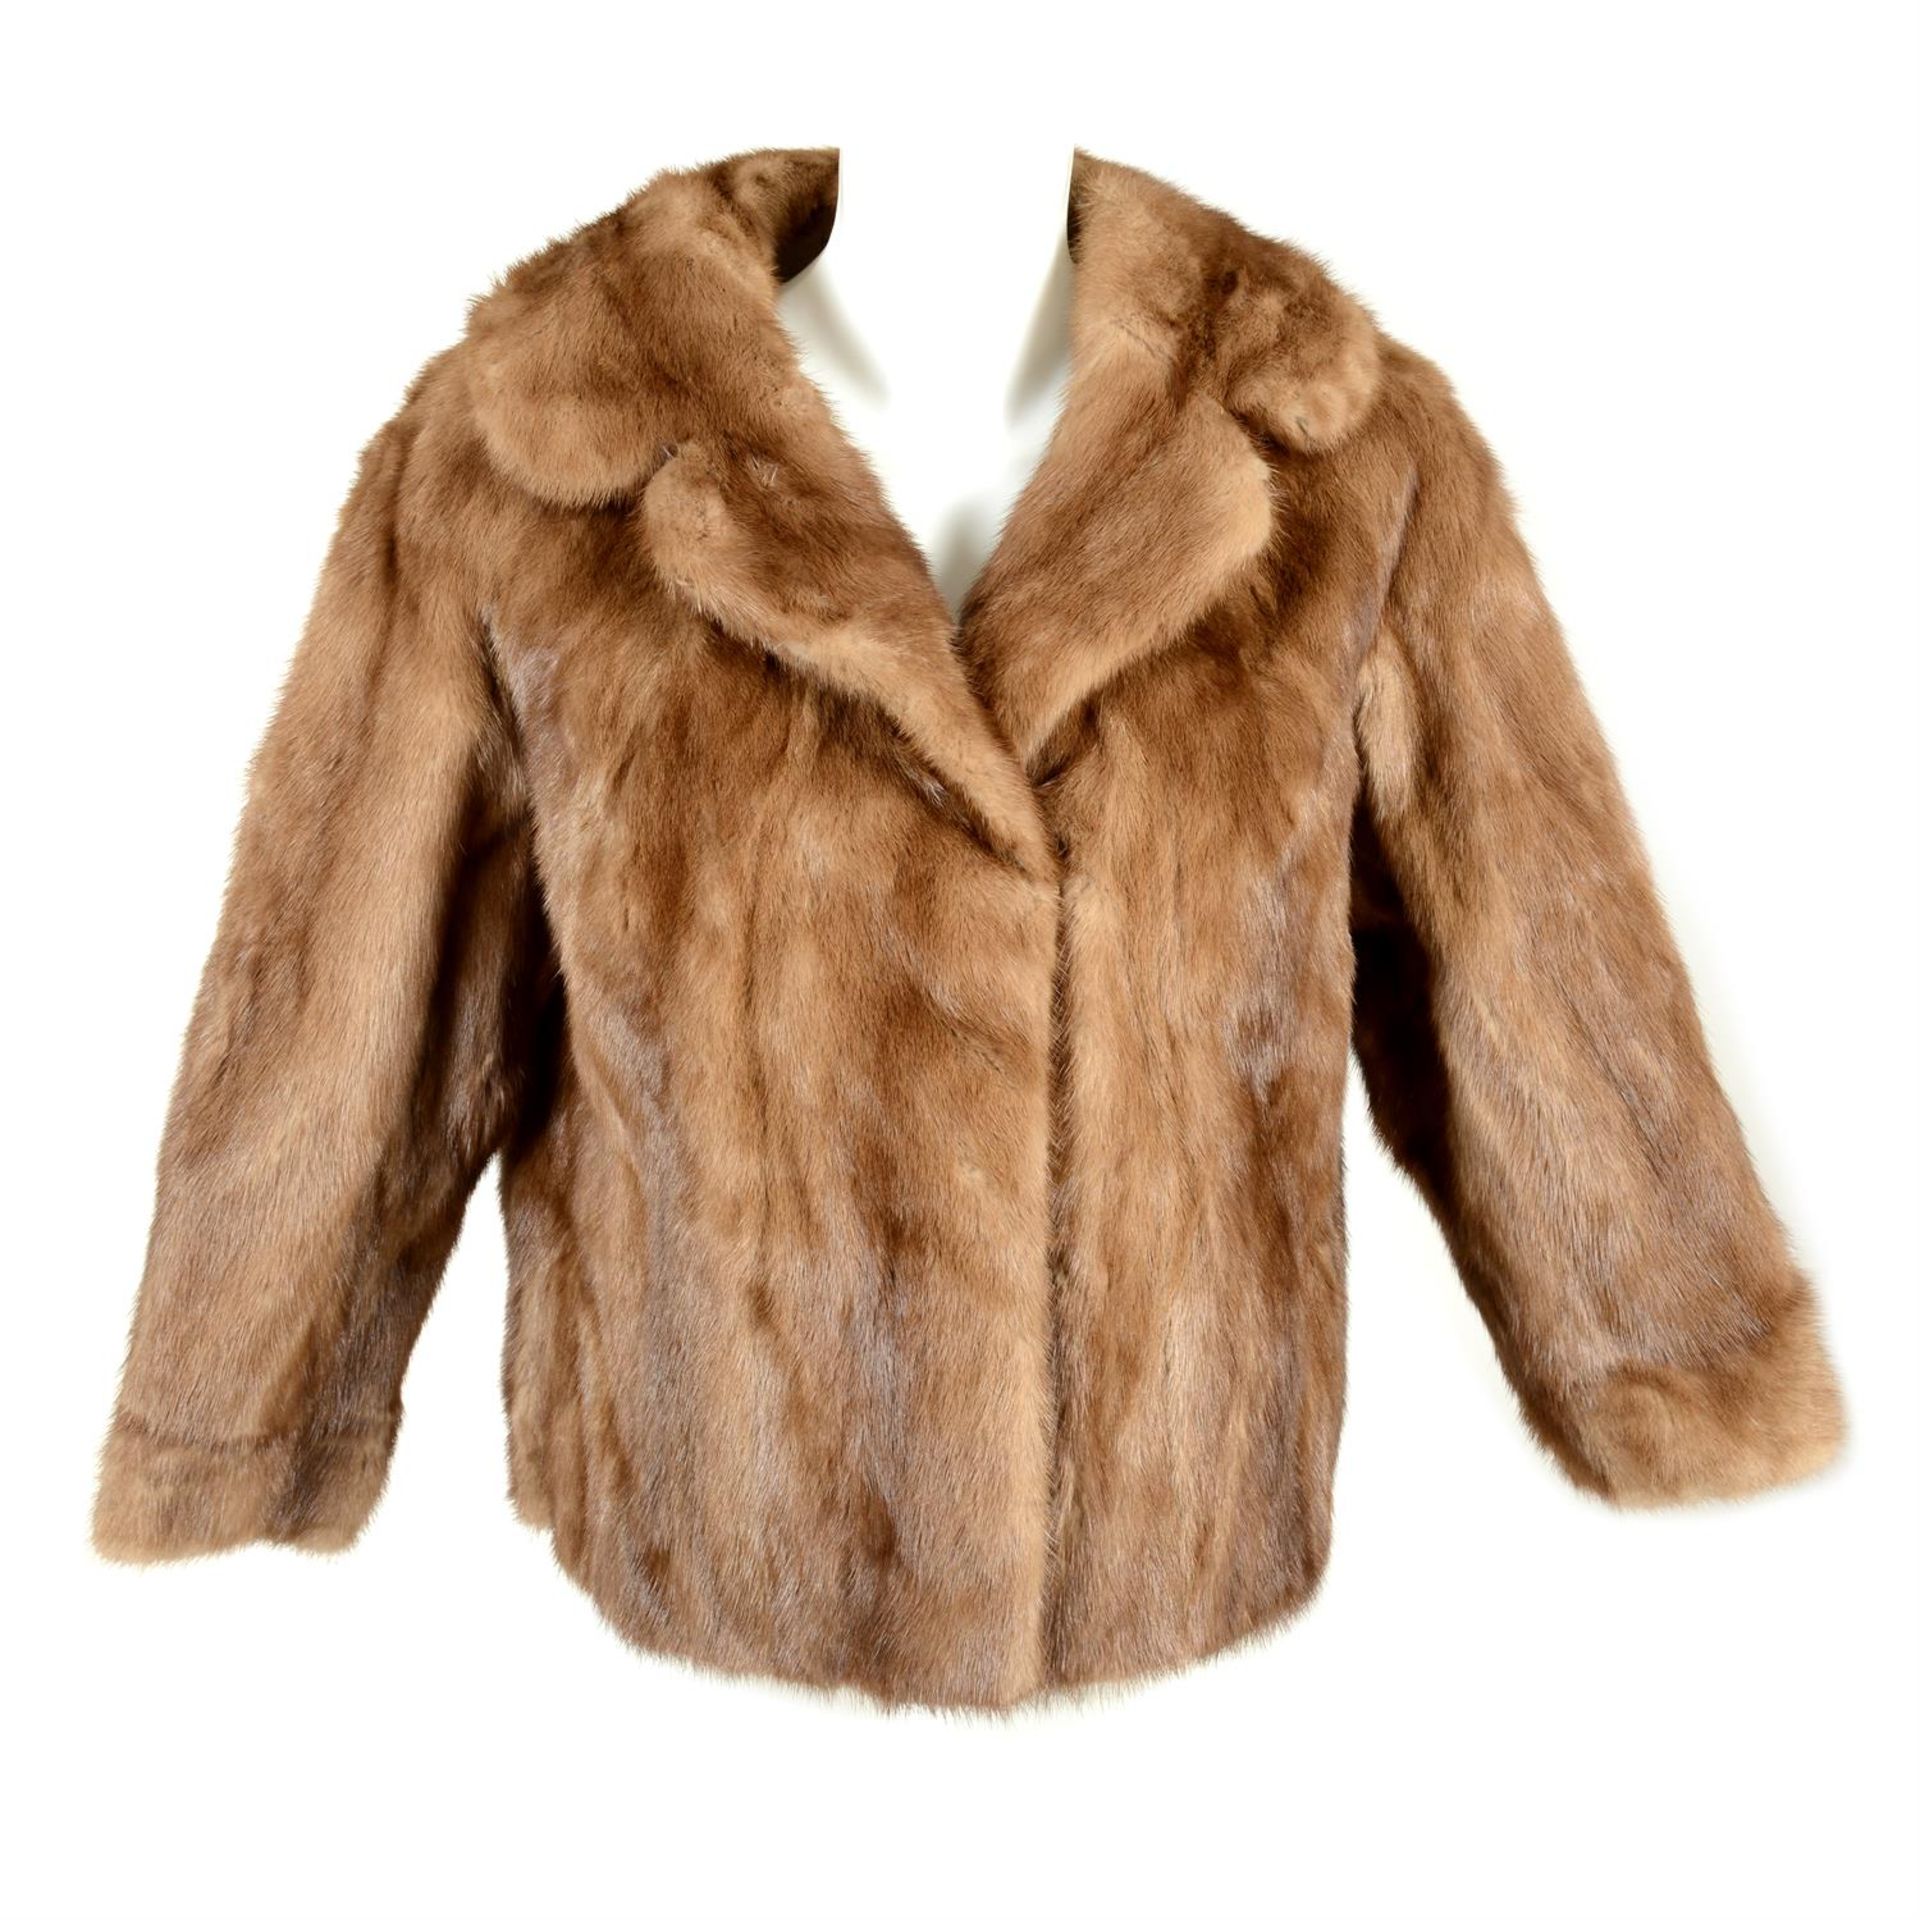 A short length mink fur jacket.